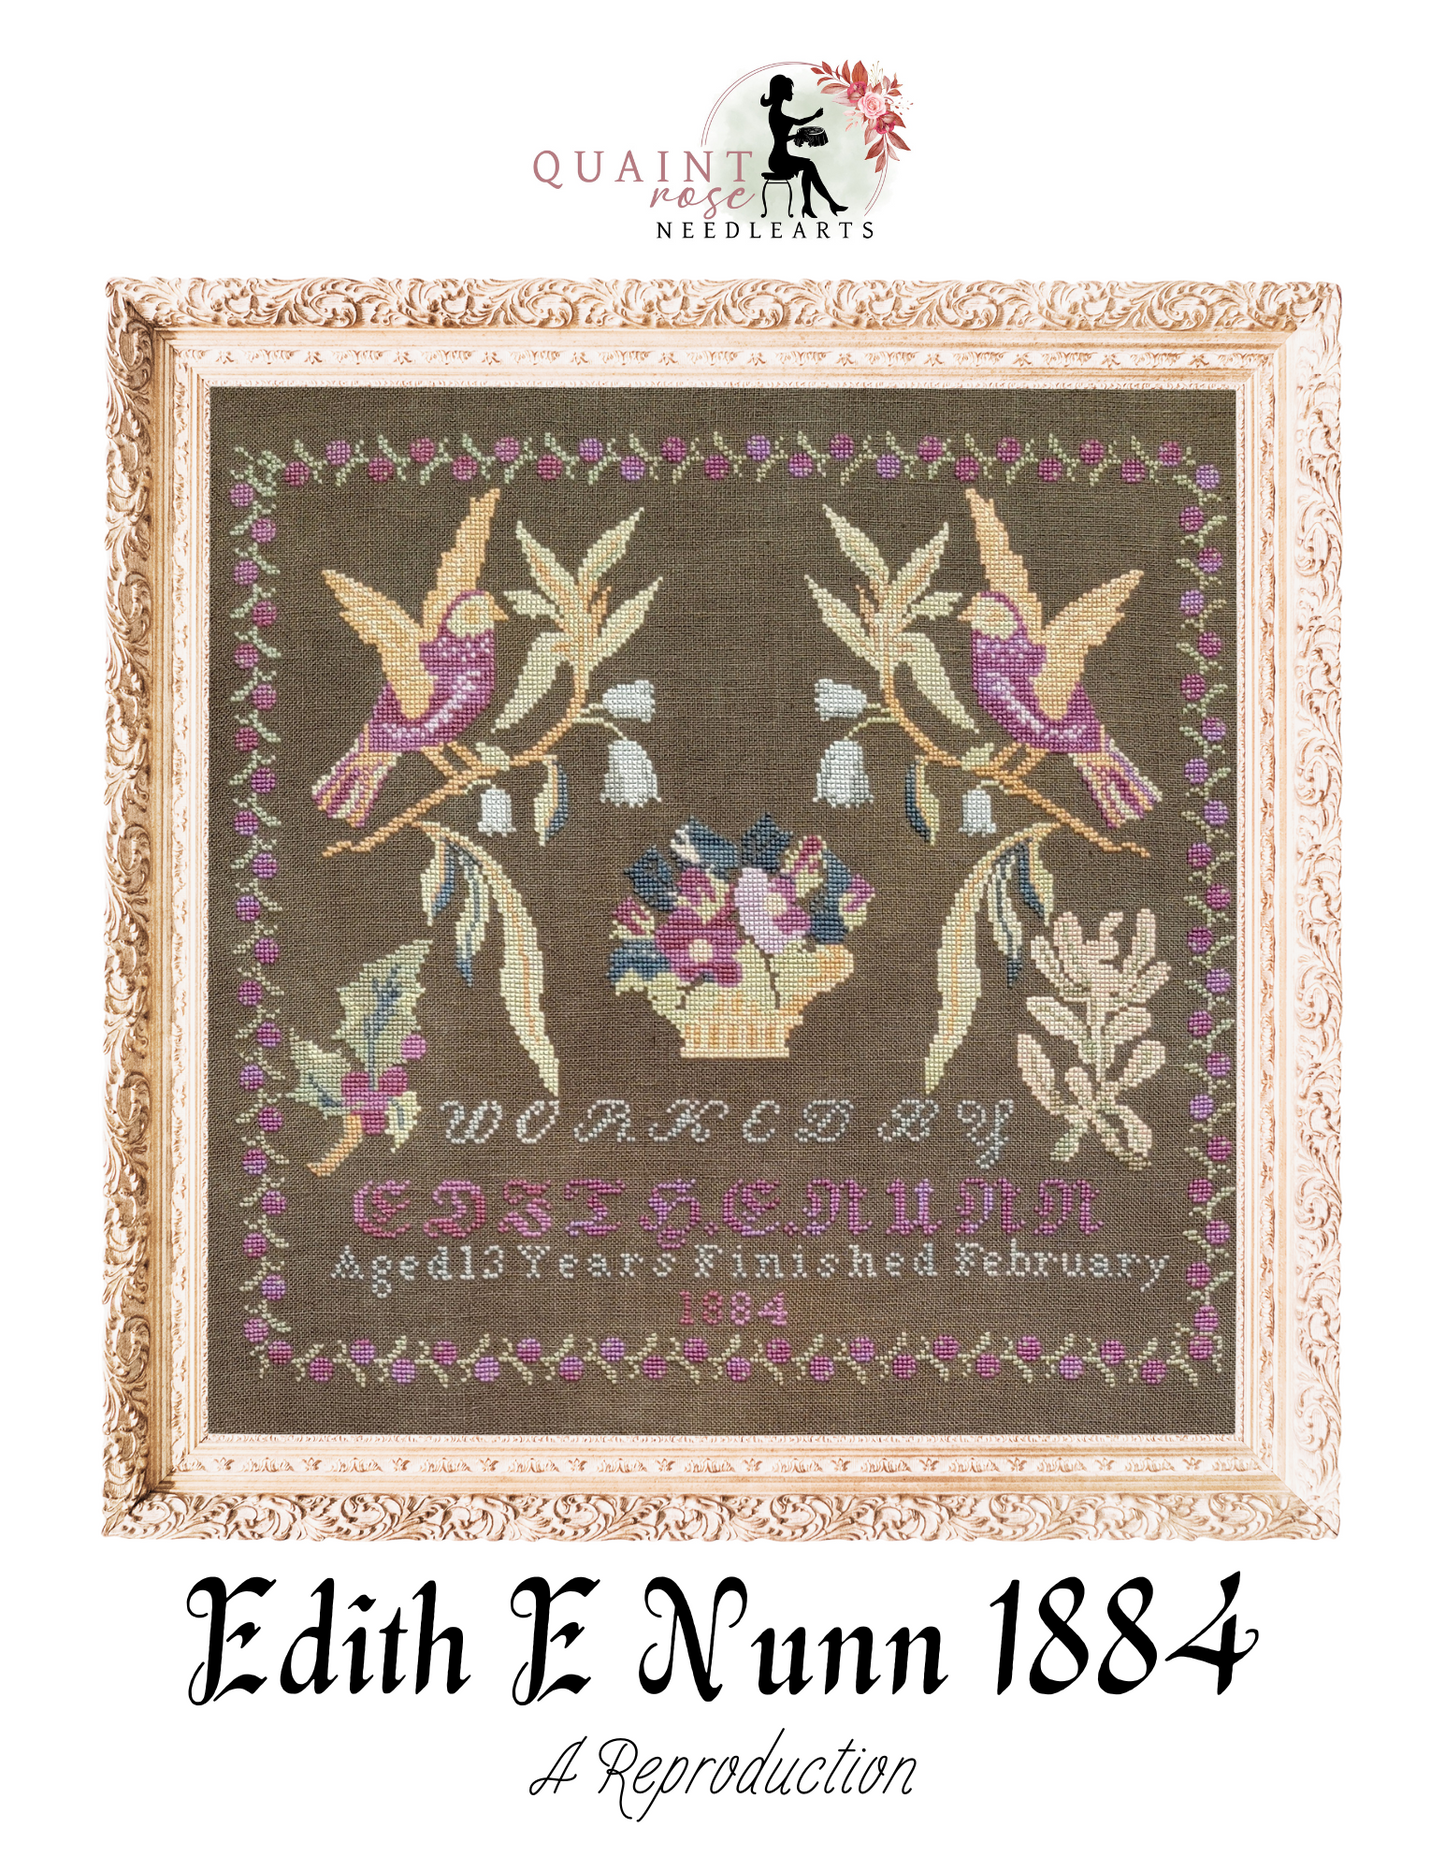 Edith E Nunn 1884 - Quaint Rose NeedleArts - Cross Stitch Patterns, The Crafty Grimalkin - A Cross Stitch Store